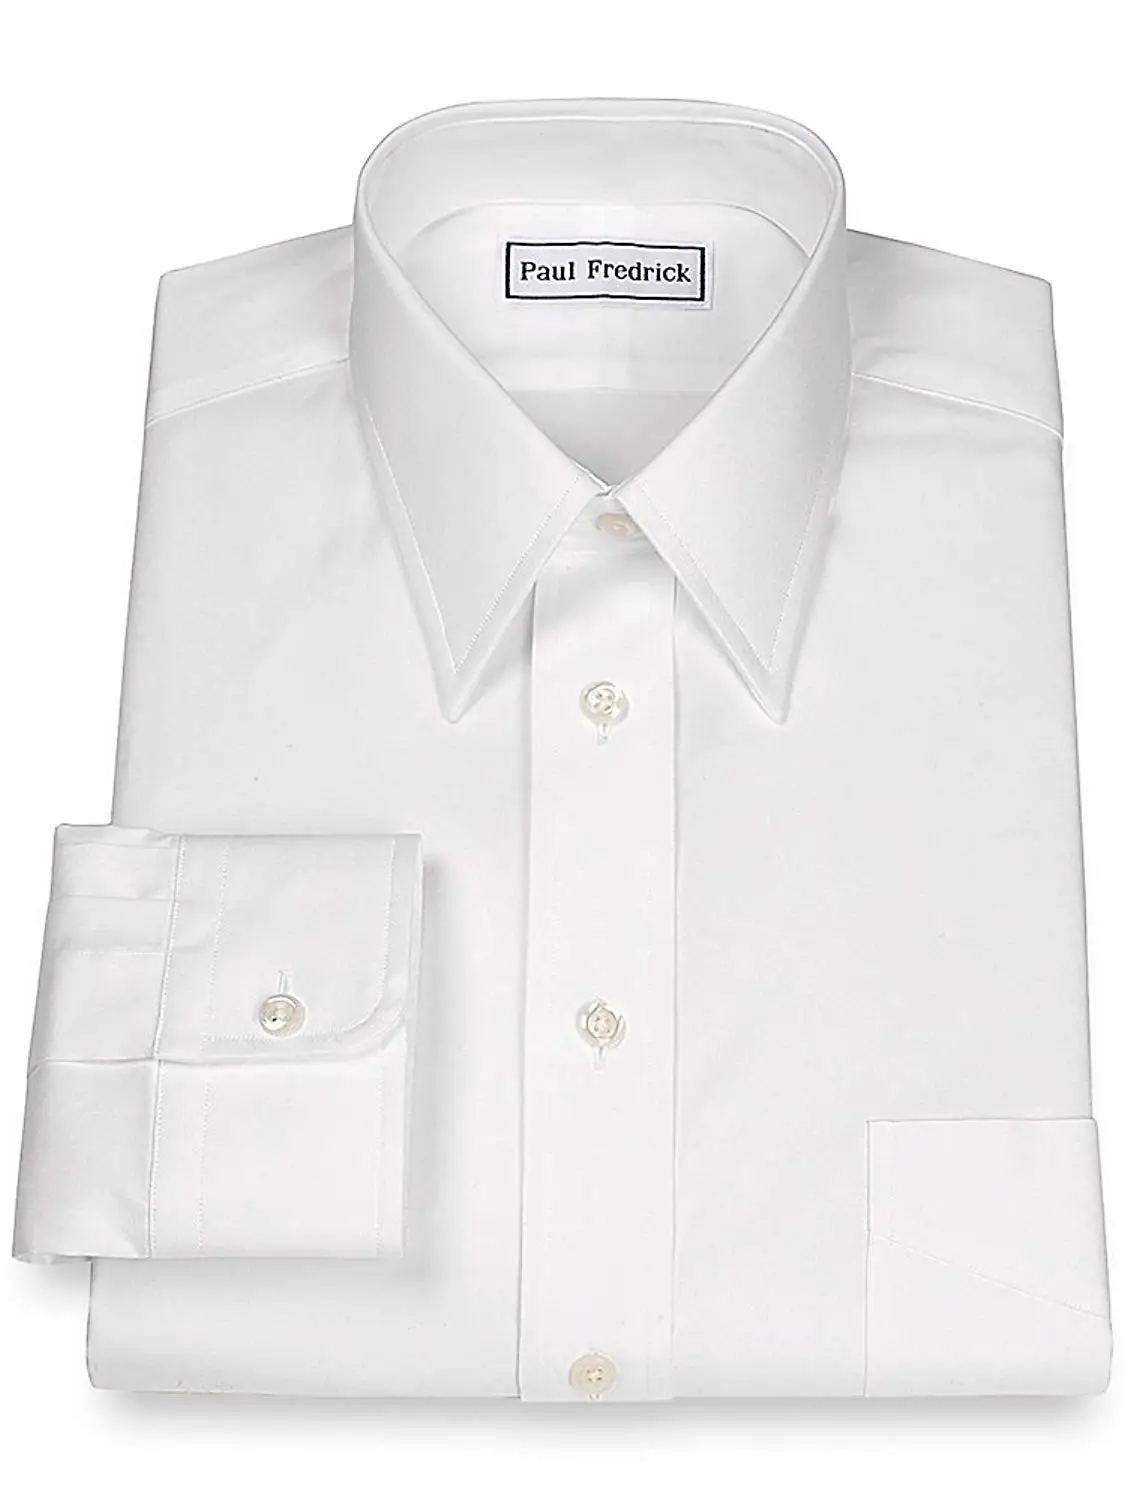 Paul Fredrick Mens Pinpoint Windsor Spread Collar French Cuff Dress Shirt